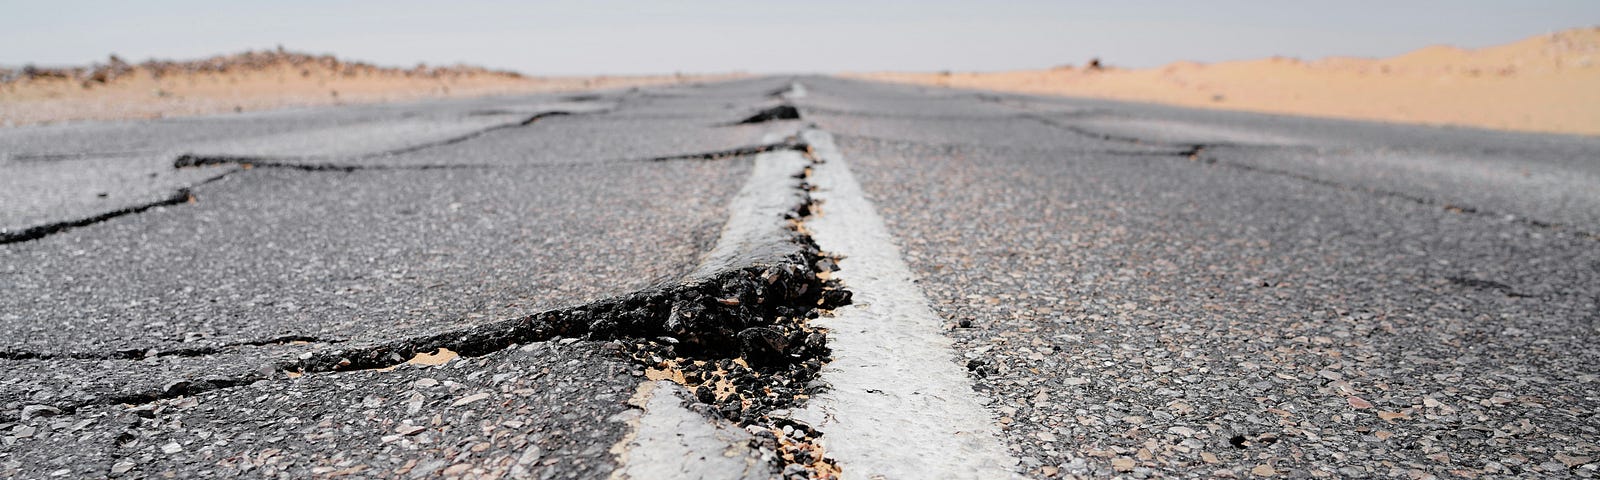 A road broken by an earthquake